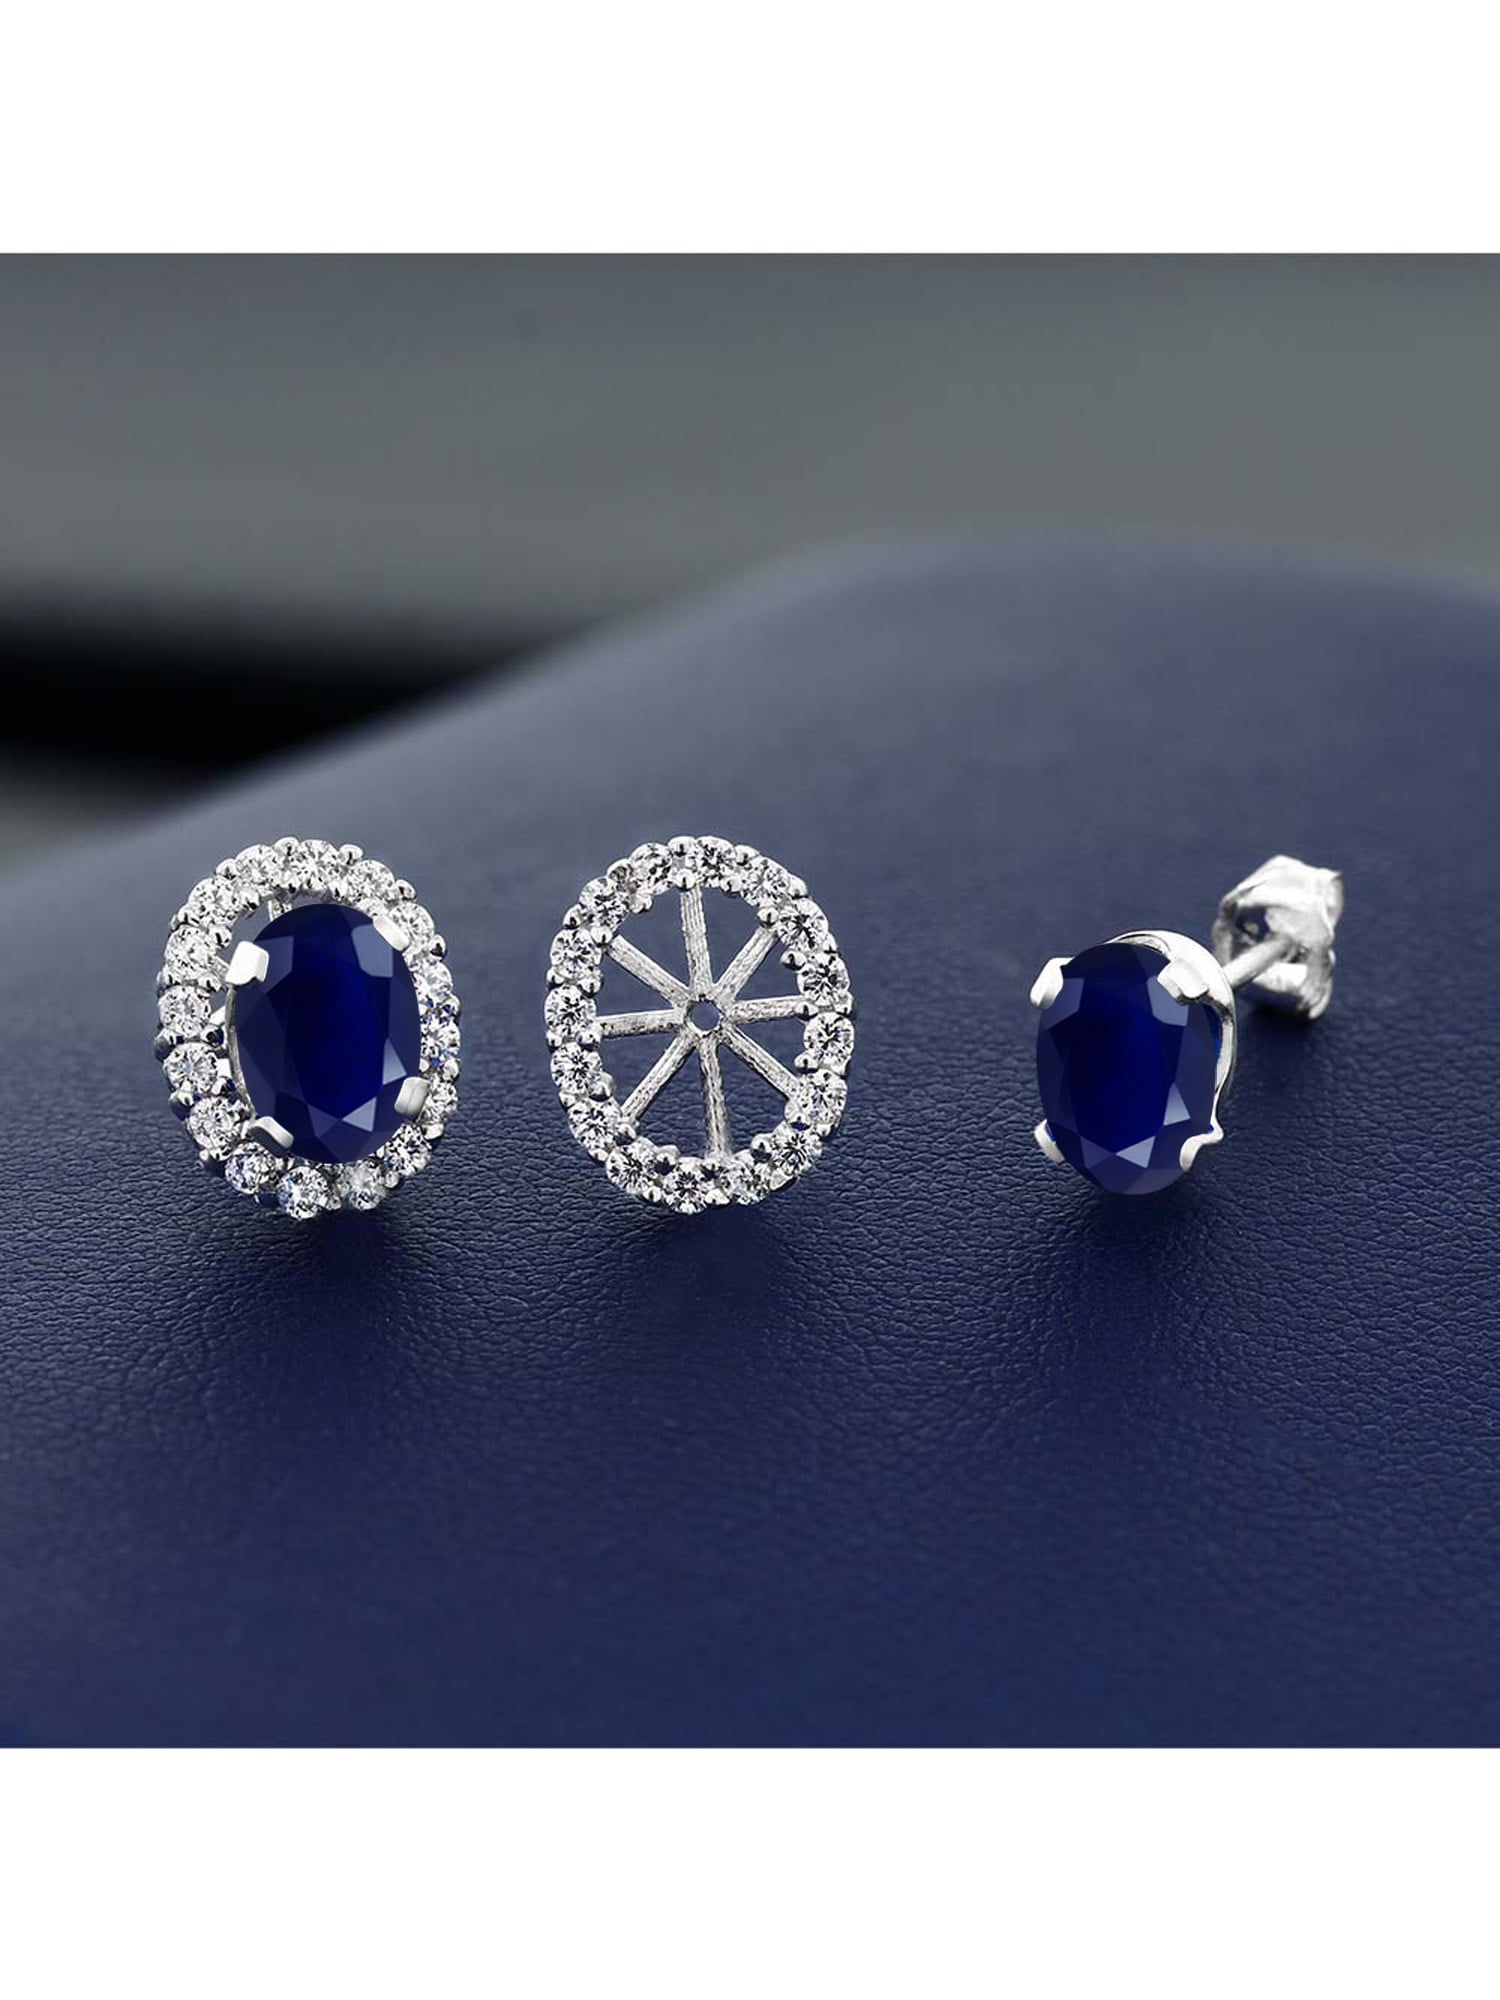 Gem Stone King 14K White Gold Blue Sapphire Women Stud Earrings 2.04 Cttw, Gemstone Birthstone, Oval 7X5MM 